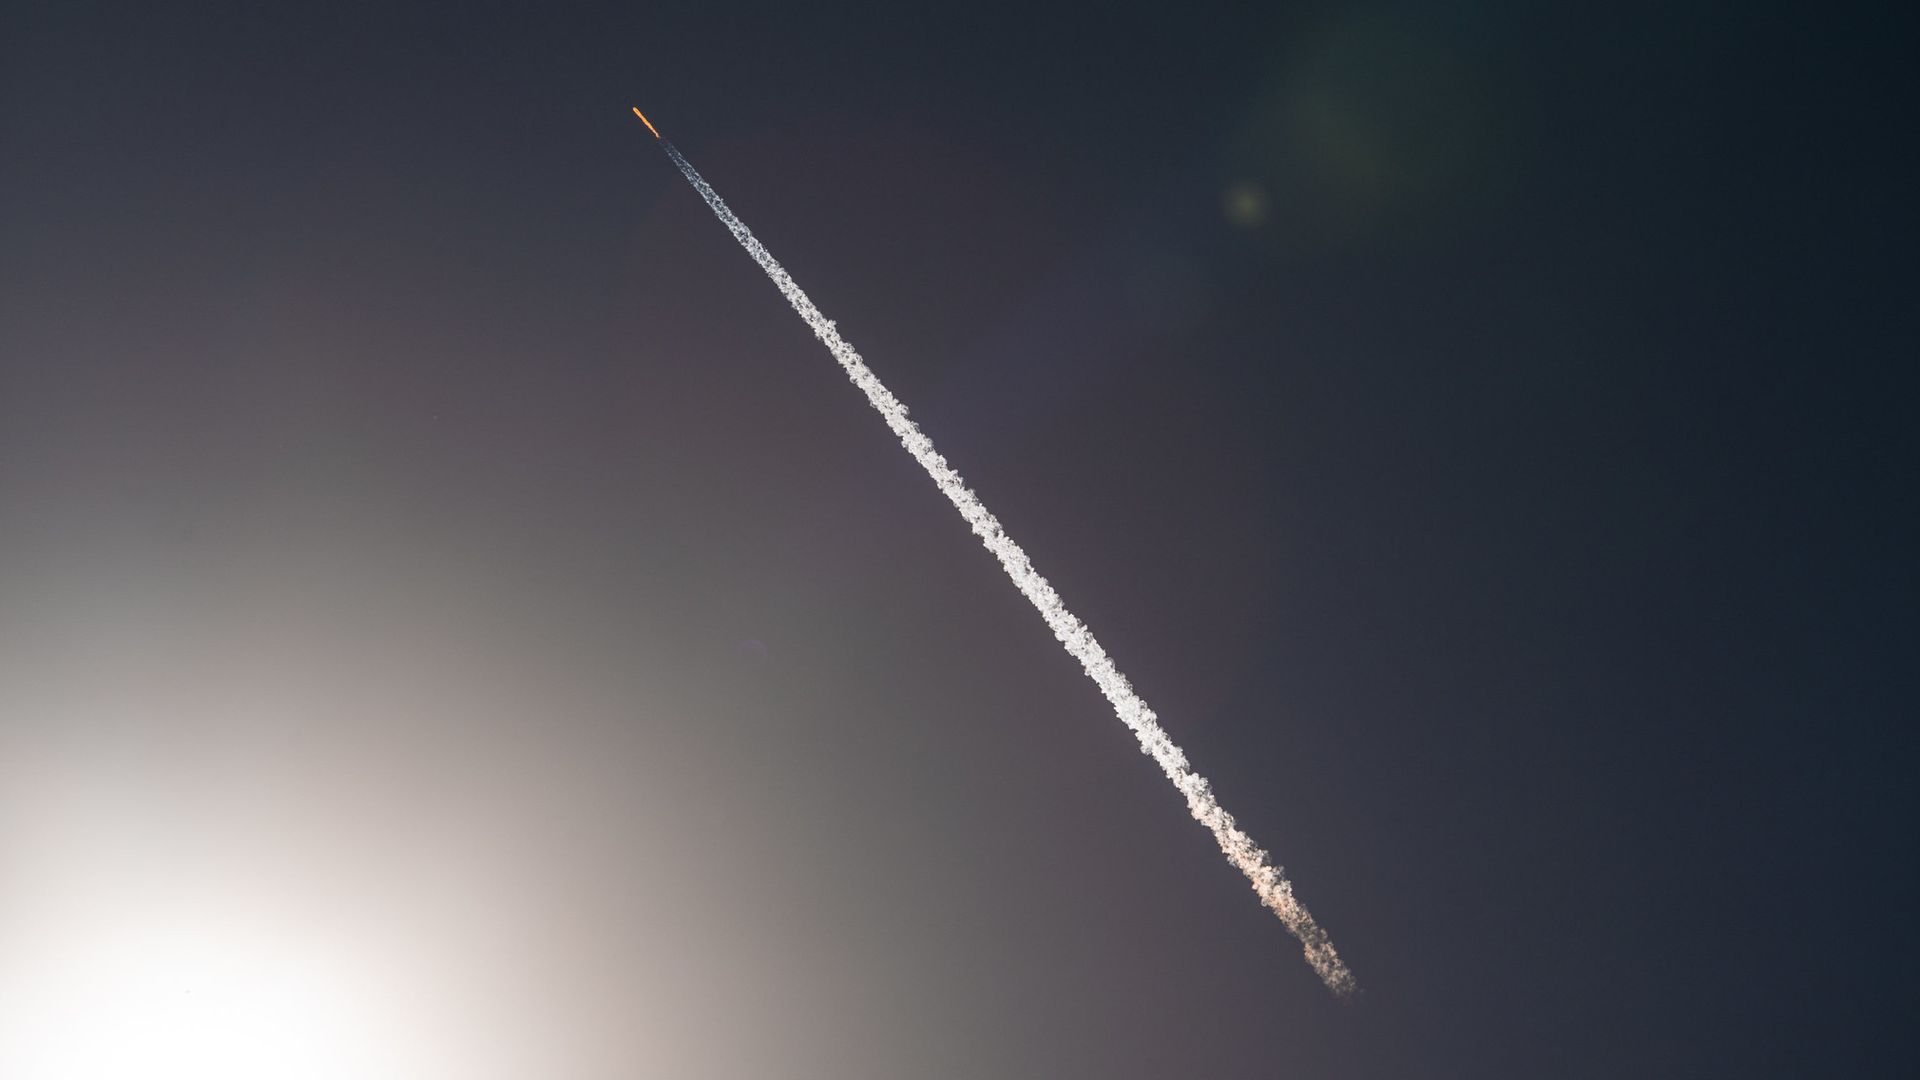 A Falcon 9 rocket launch illuminated by the Sun.